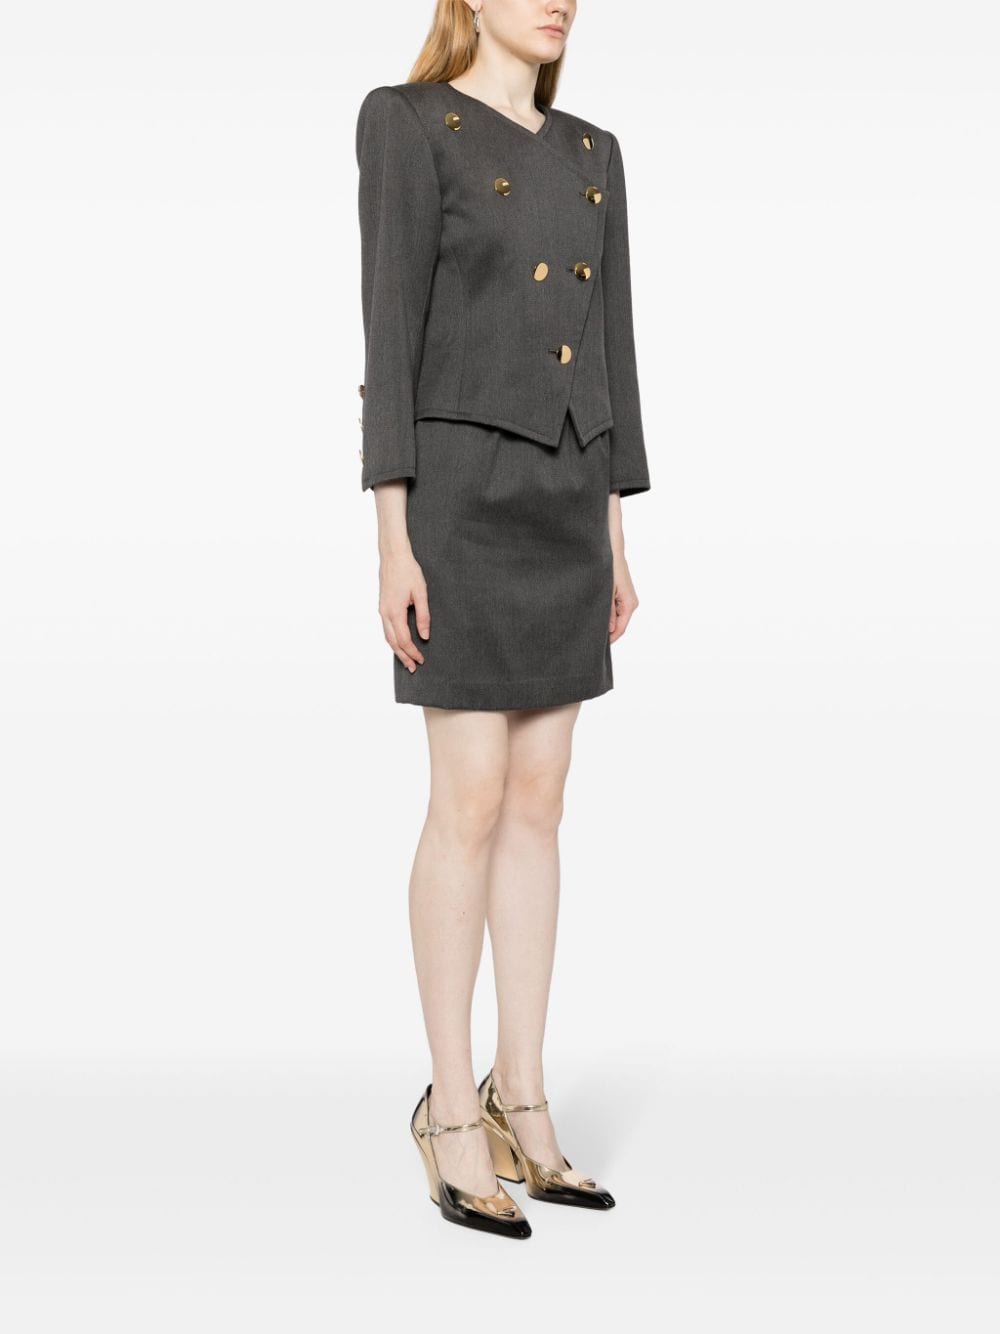 Pre-owned Saint Laurent 双排扣半身裙西装套装 In Grey